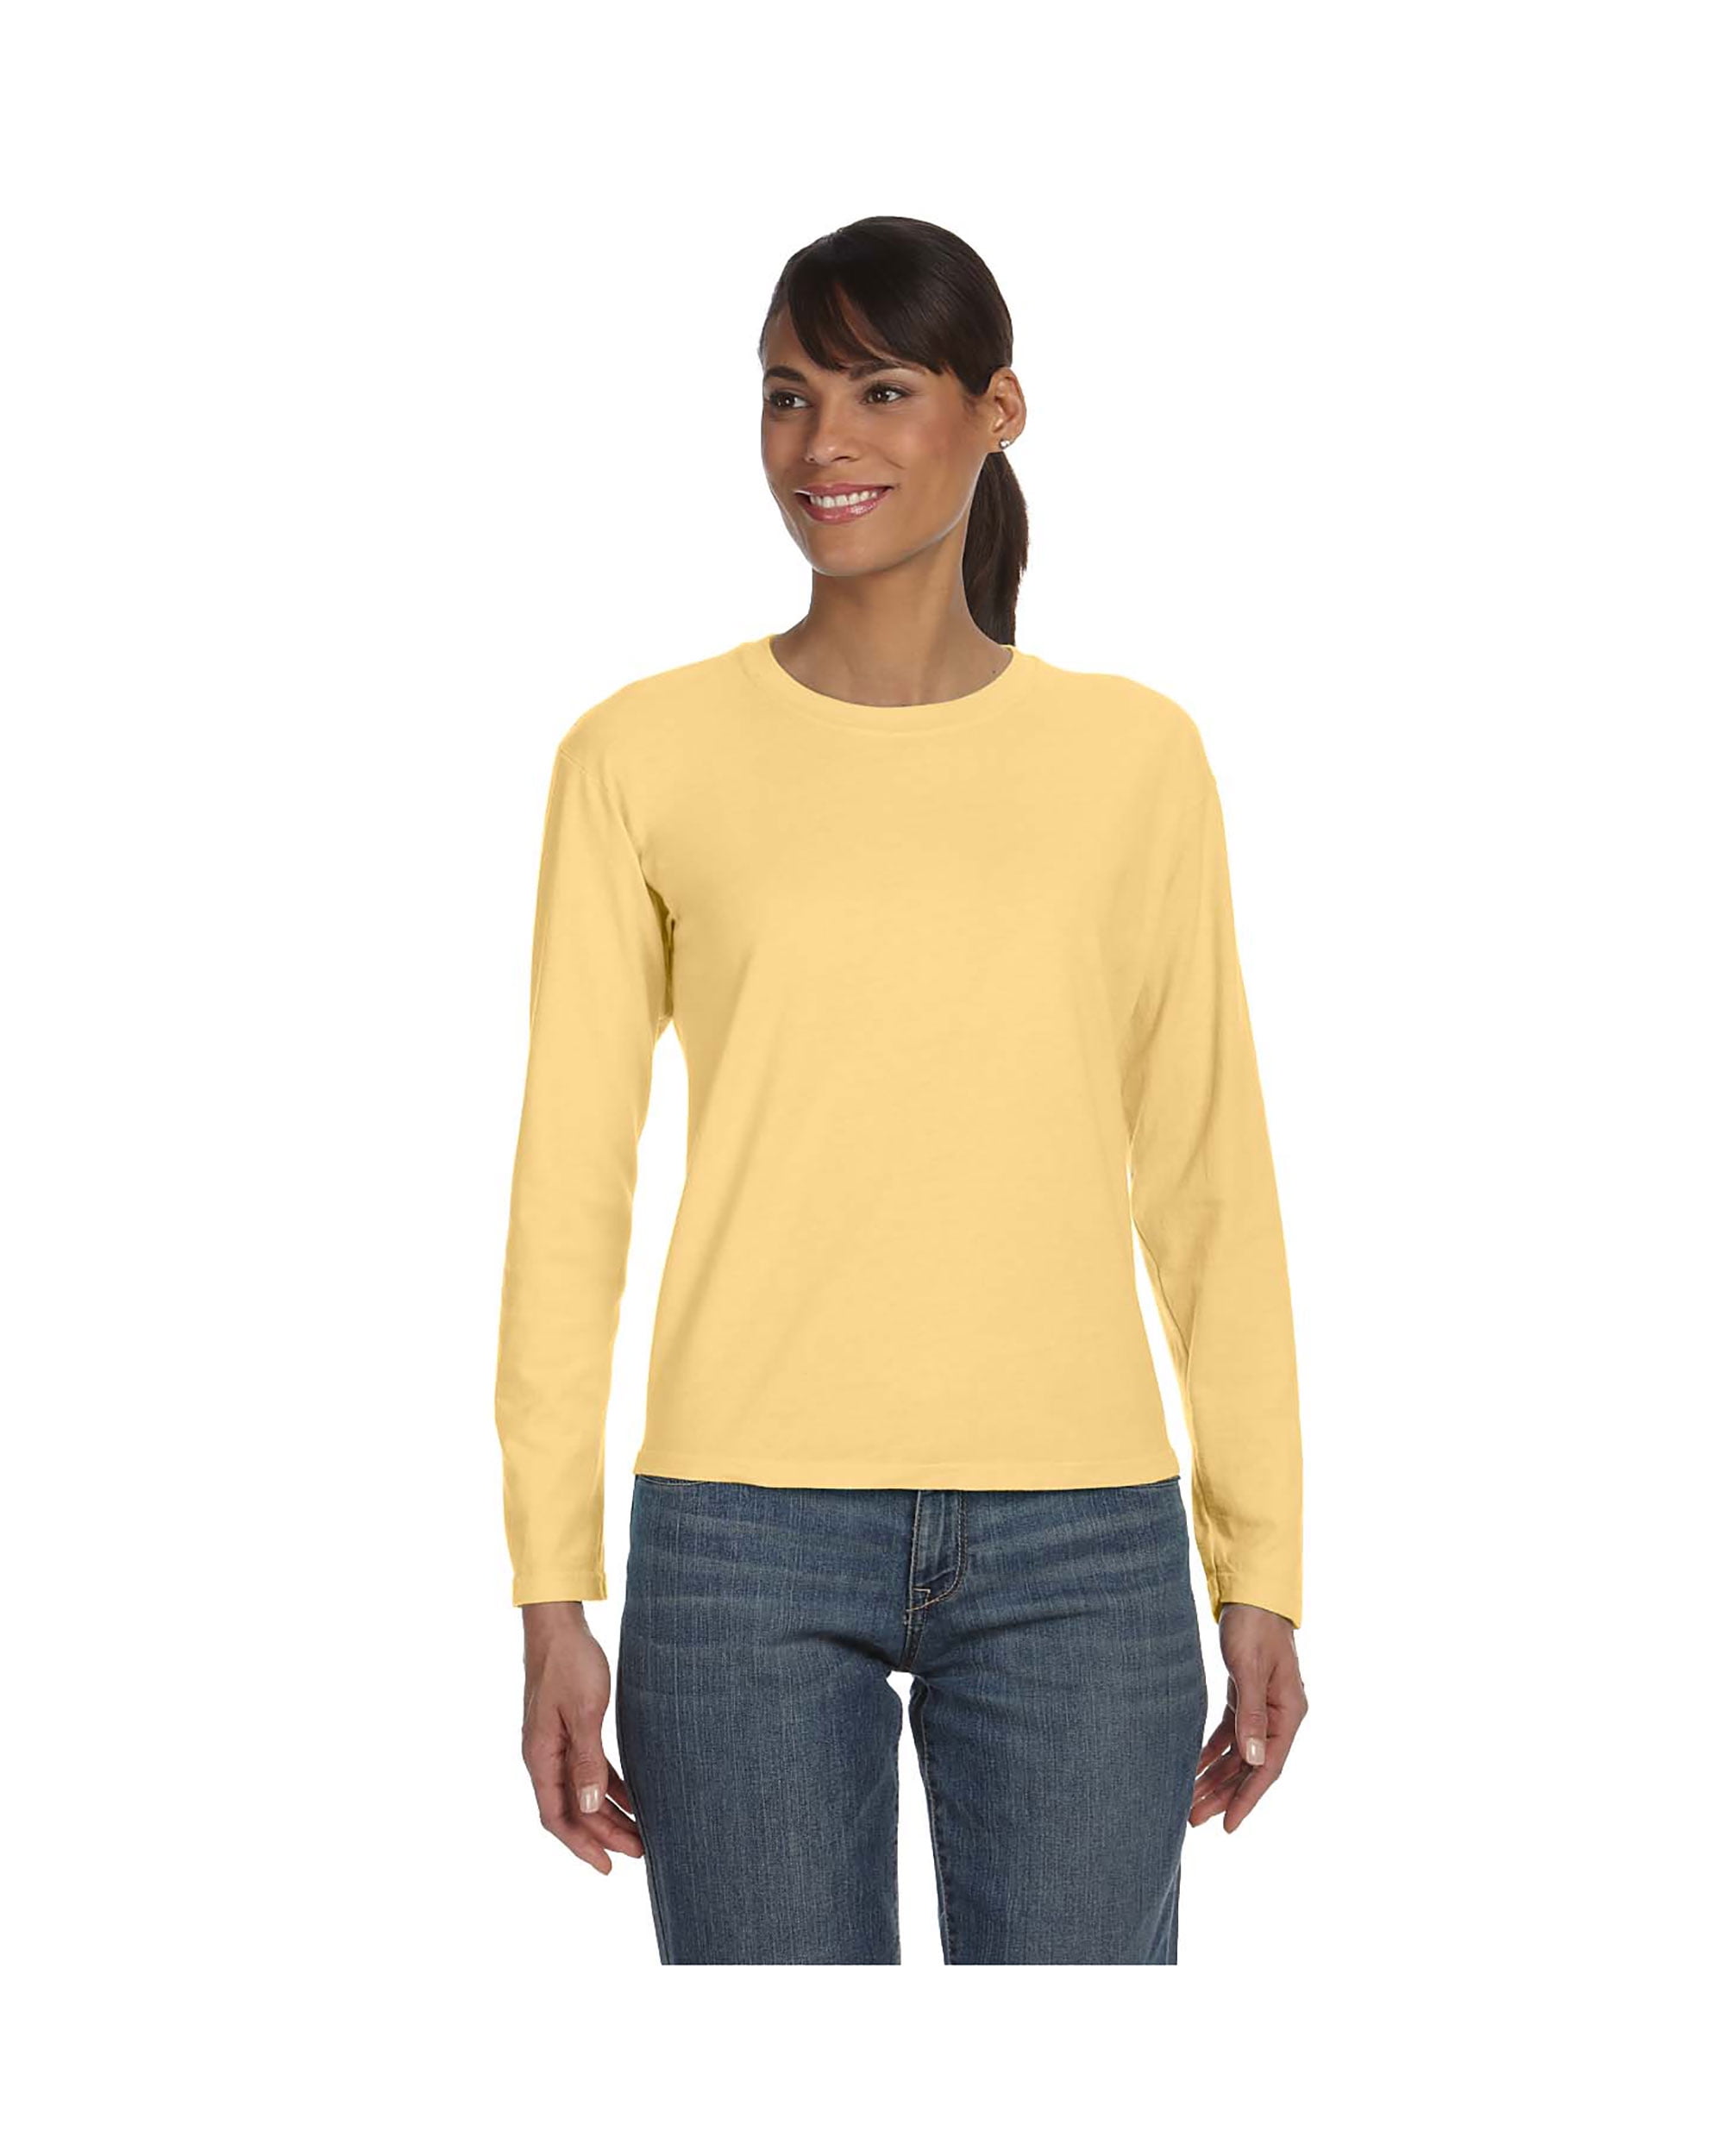 long sleeve yellow shirt womens